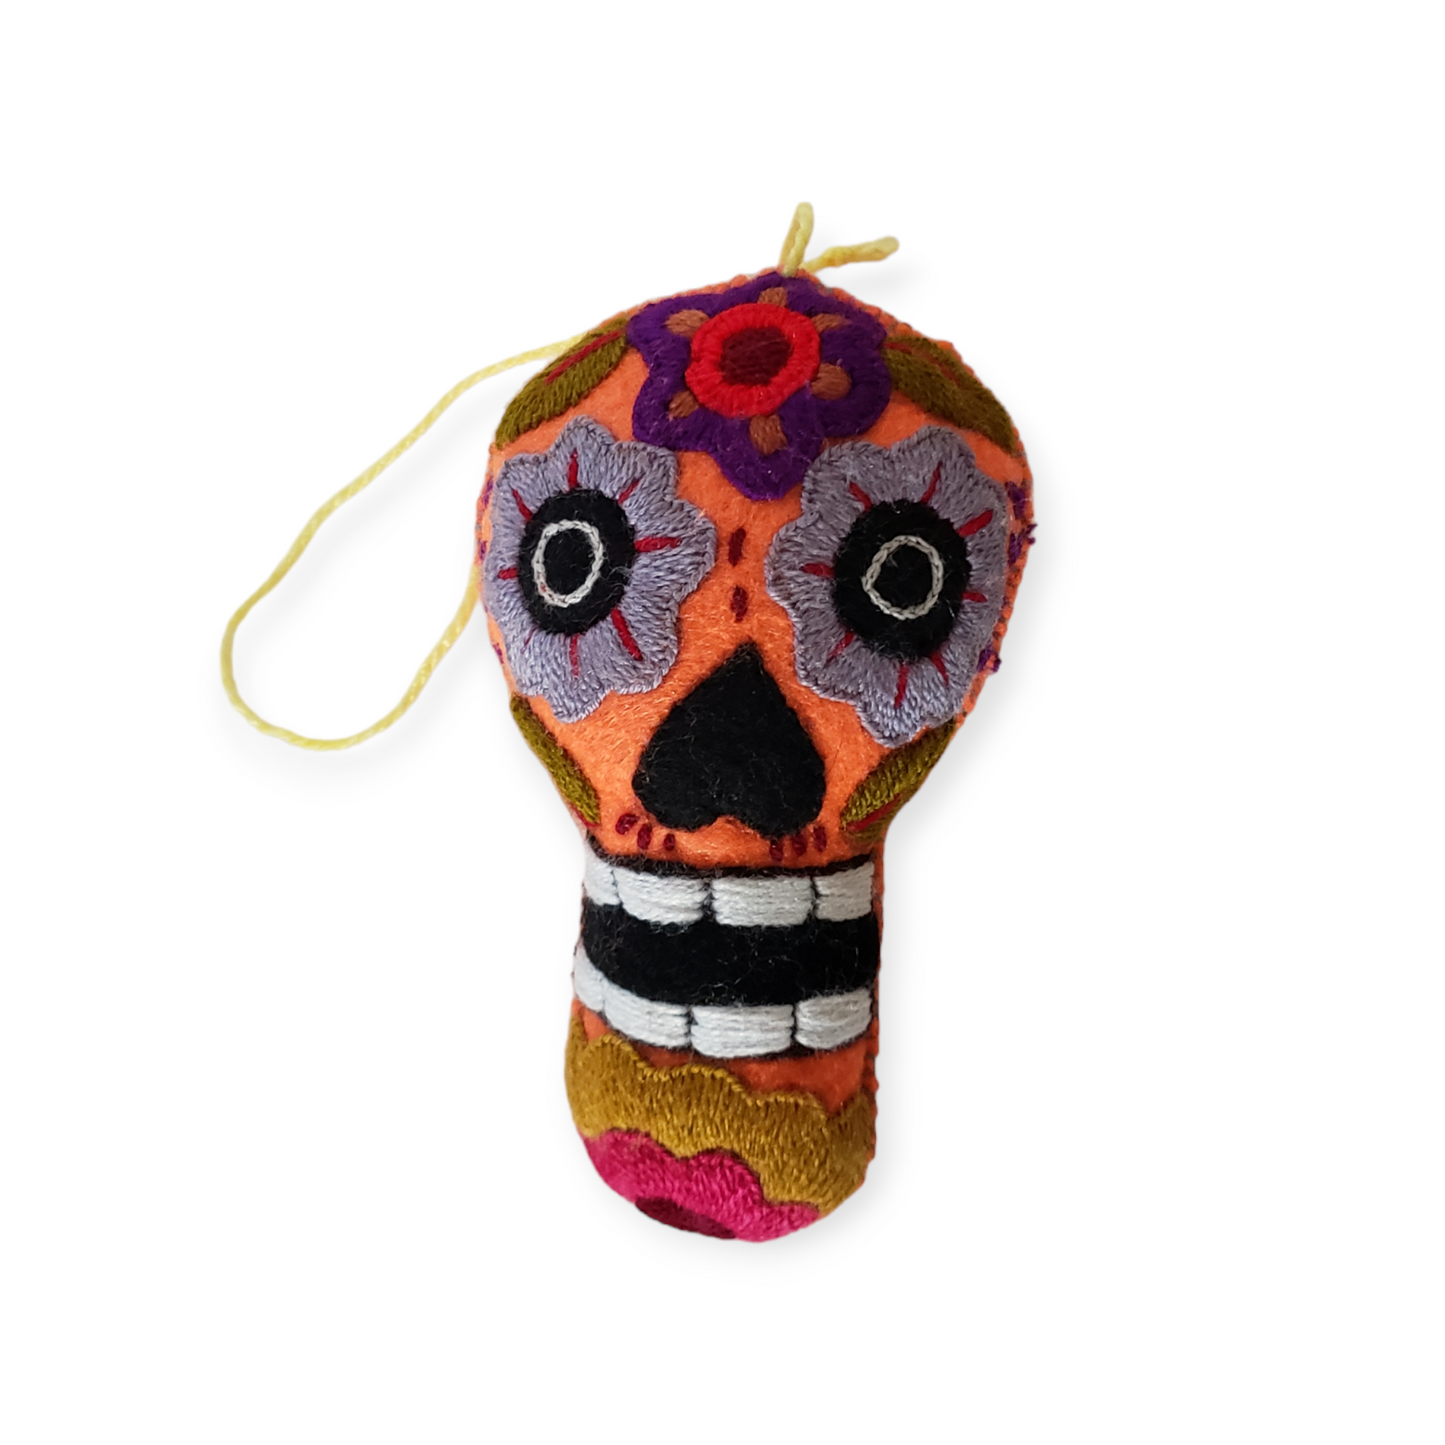 Dia de Muertos Skull Ornaments from Chiapas Mexico